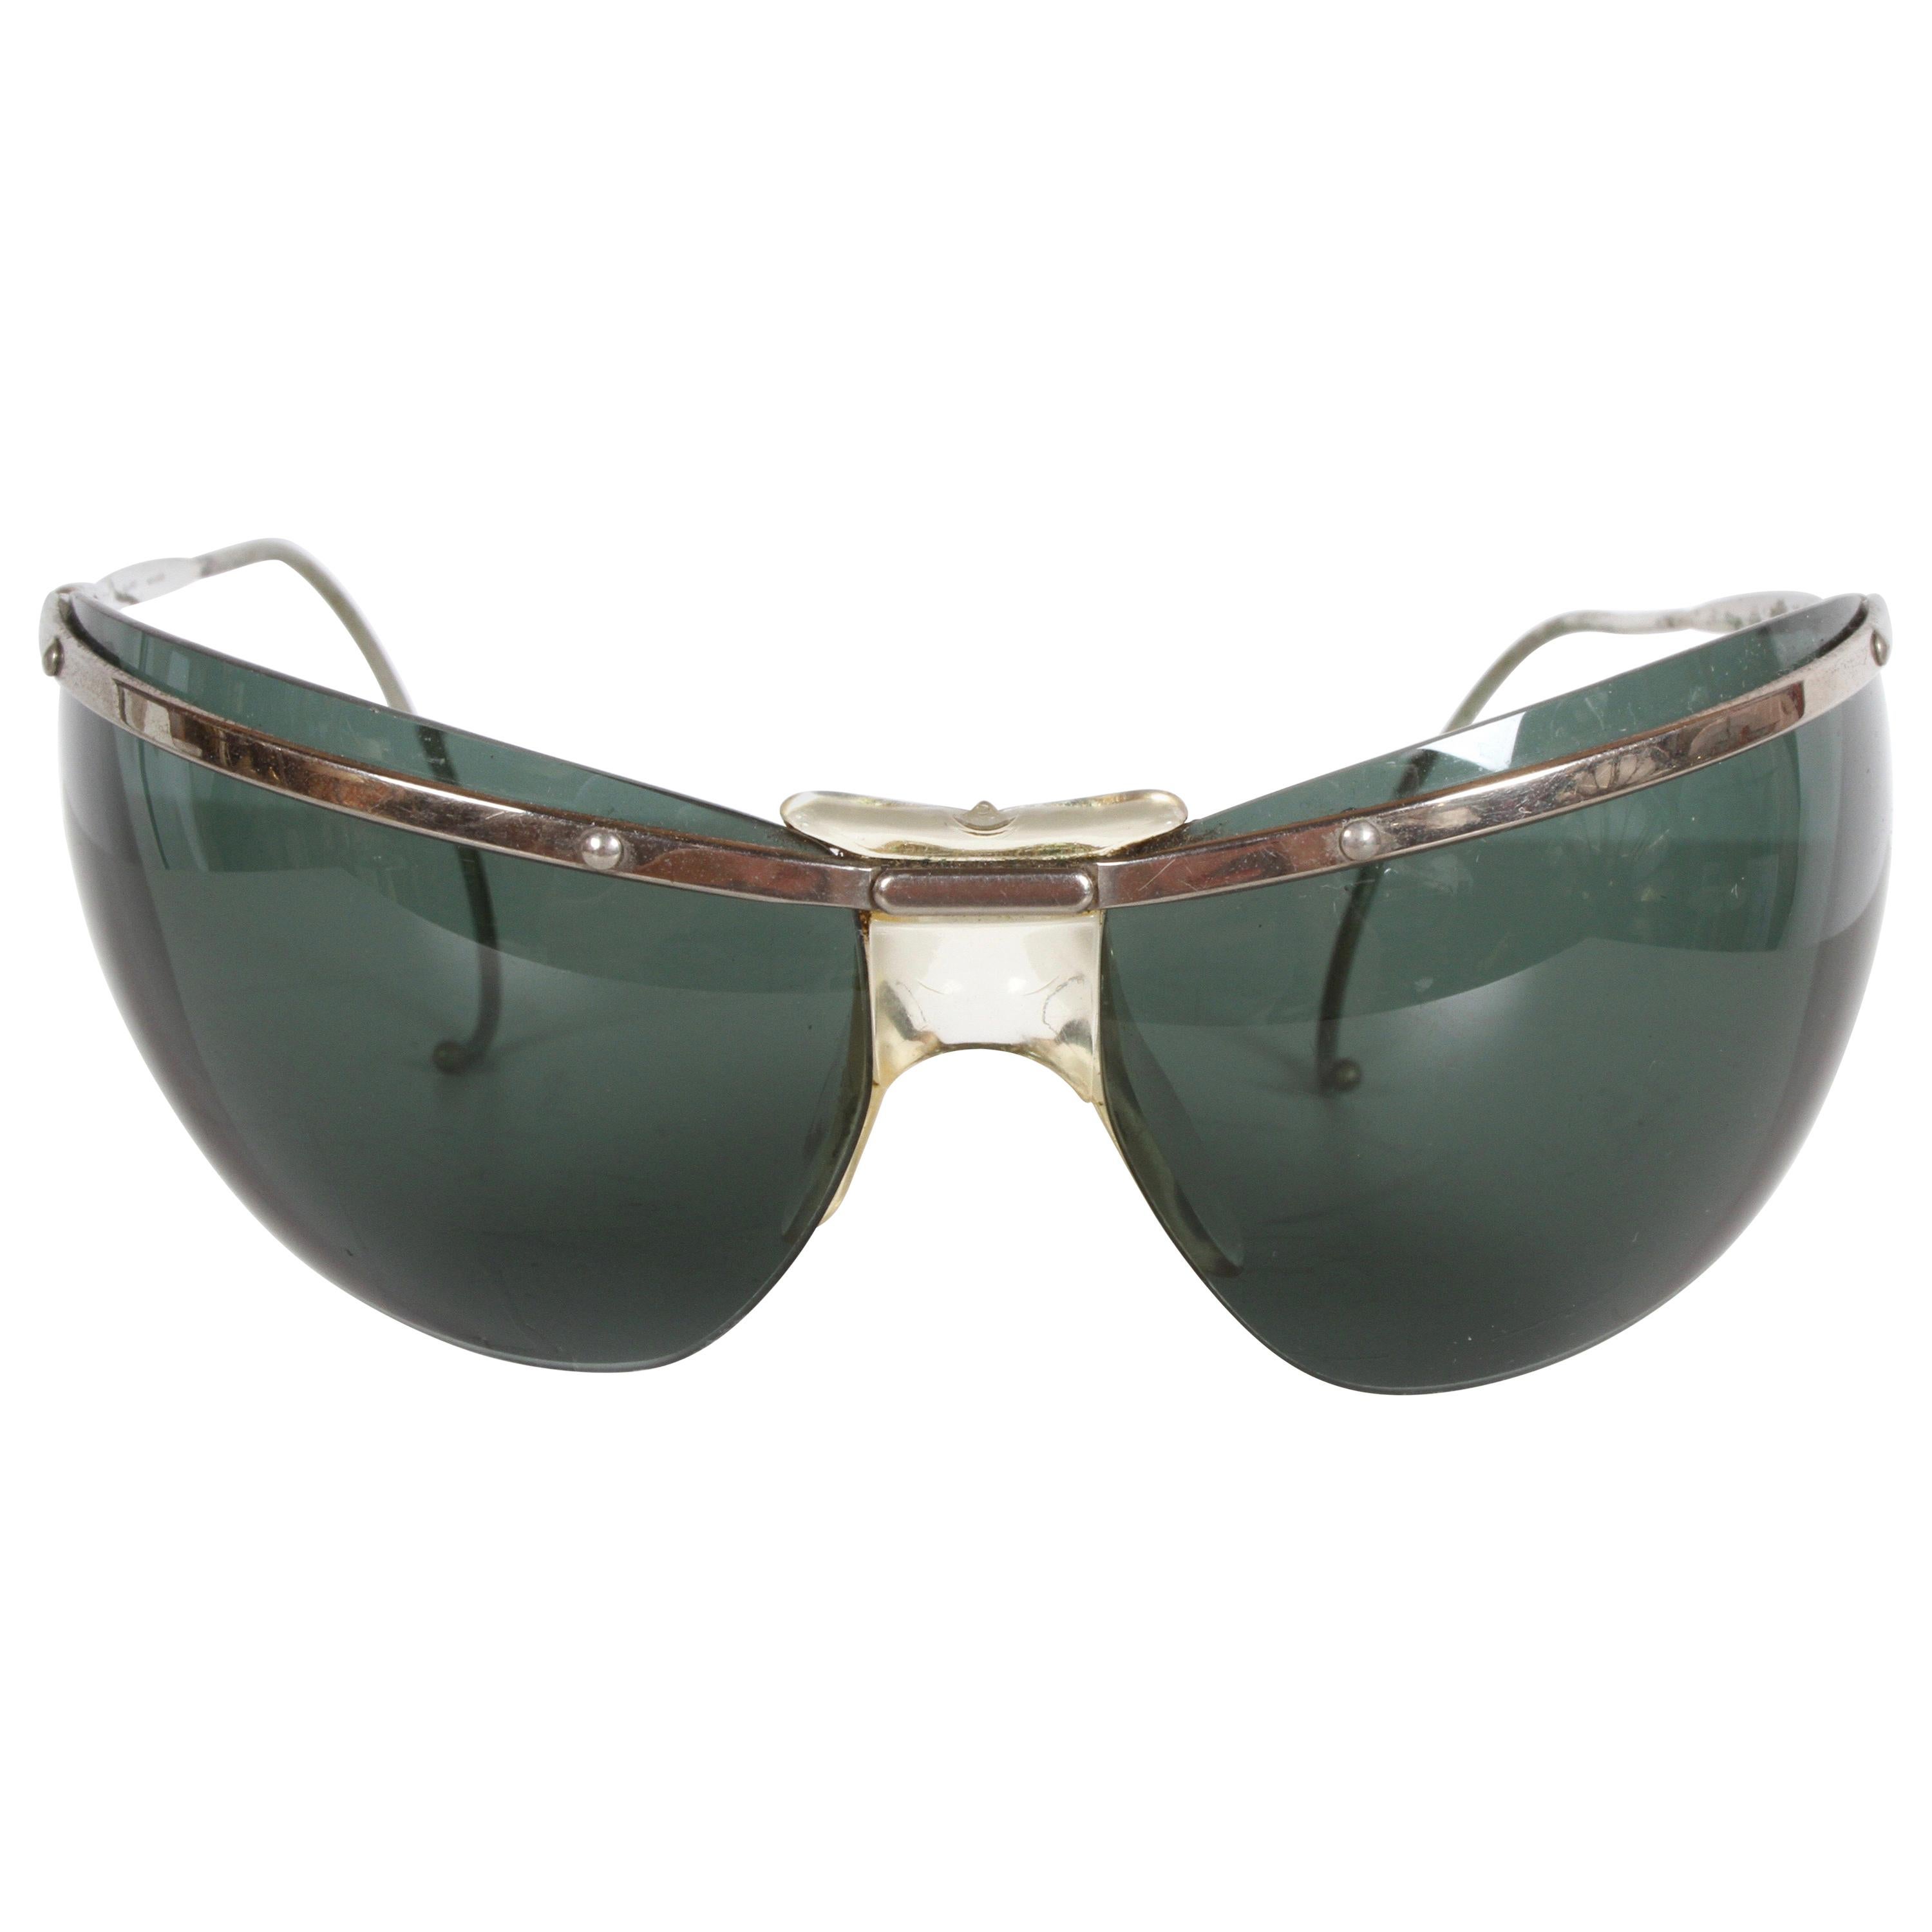 Rare Sport Wraparound 1960s Vintage Sunglasses by Sol-Amor France, Green Lenses